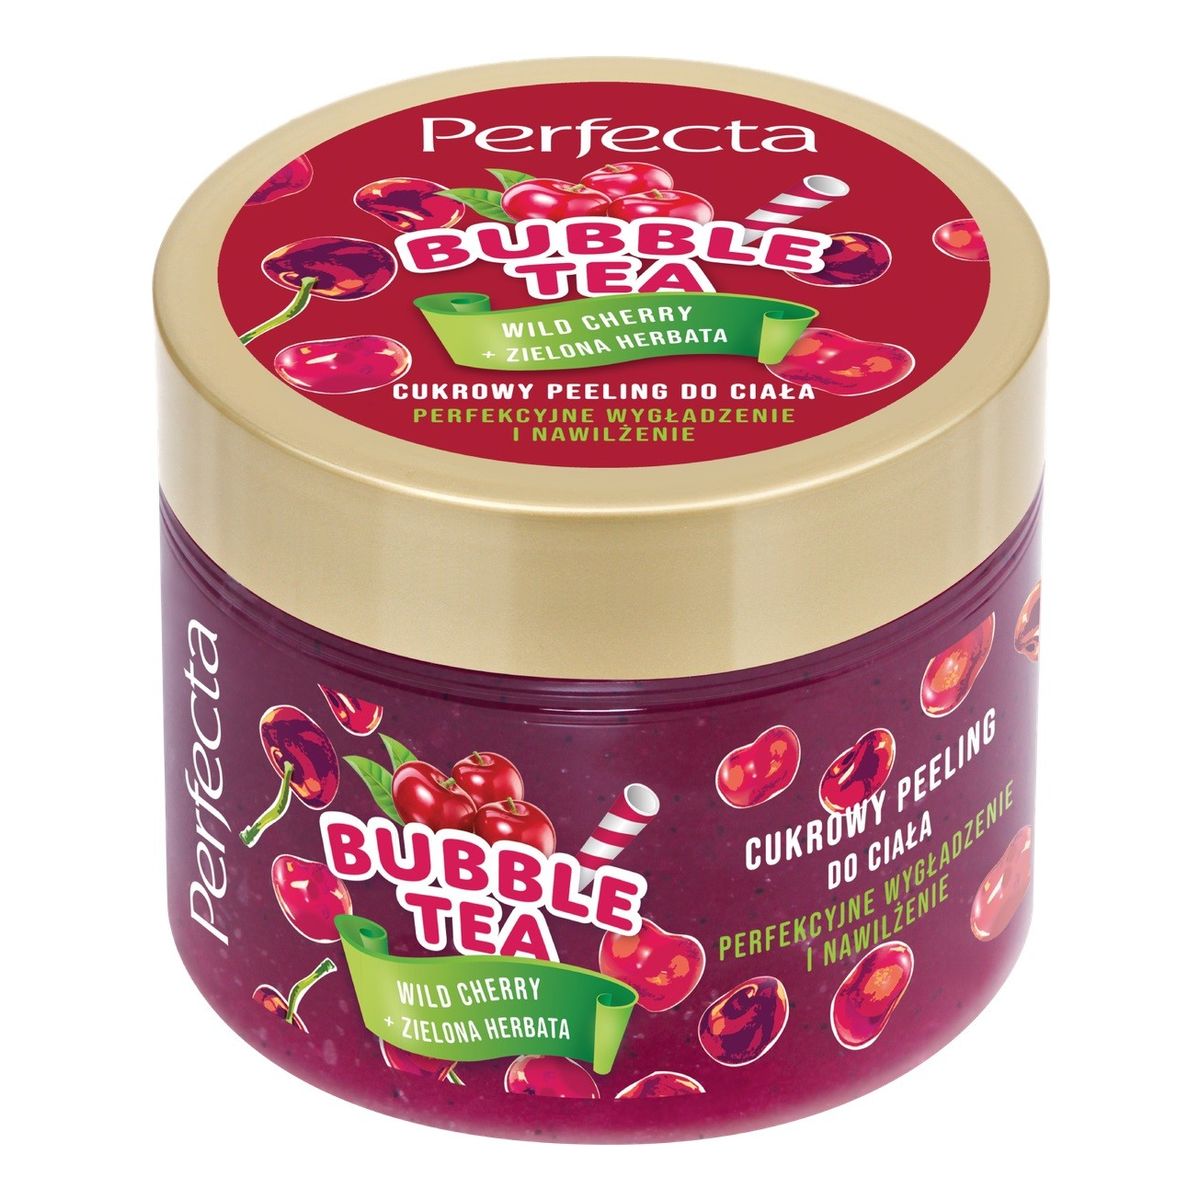 Perfecta Bubble Tea peeling cukrowy do ciała wild cherry 300g